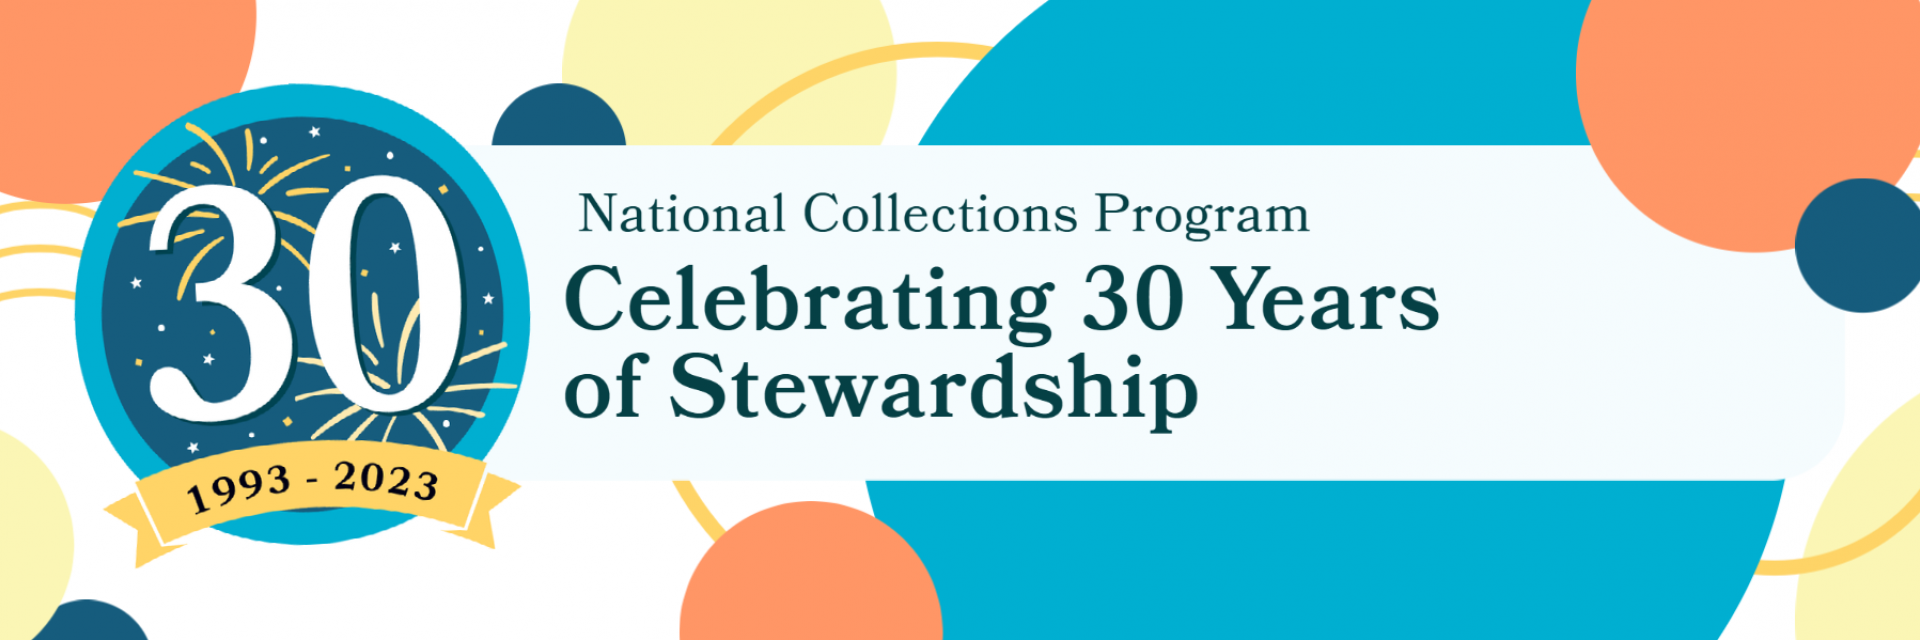 NCP Celebrates 30 Years of Stewardship